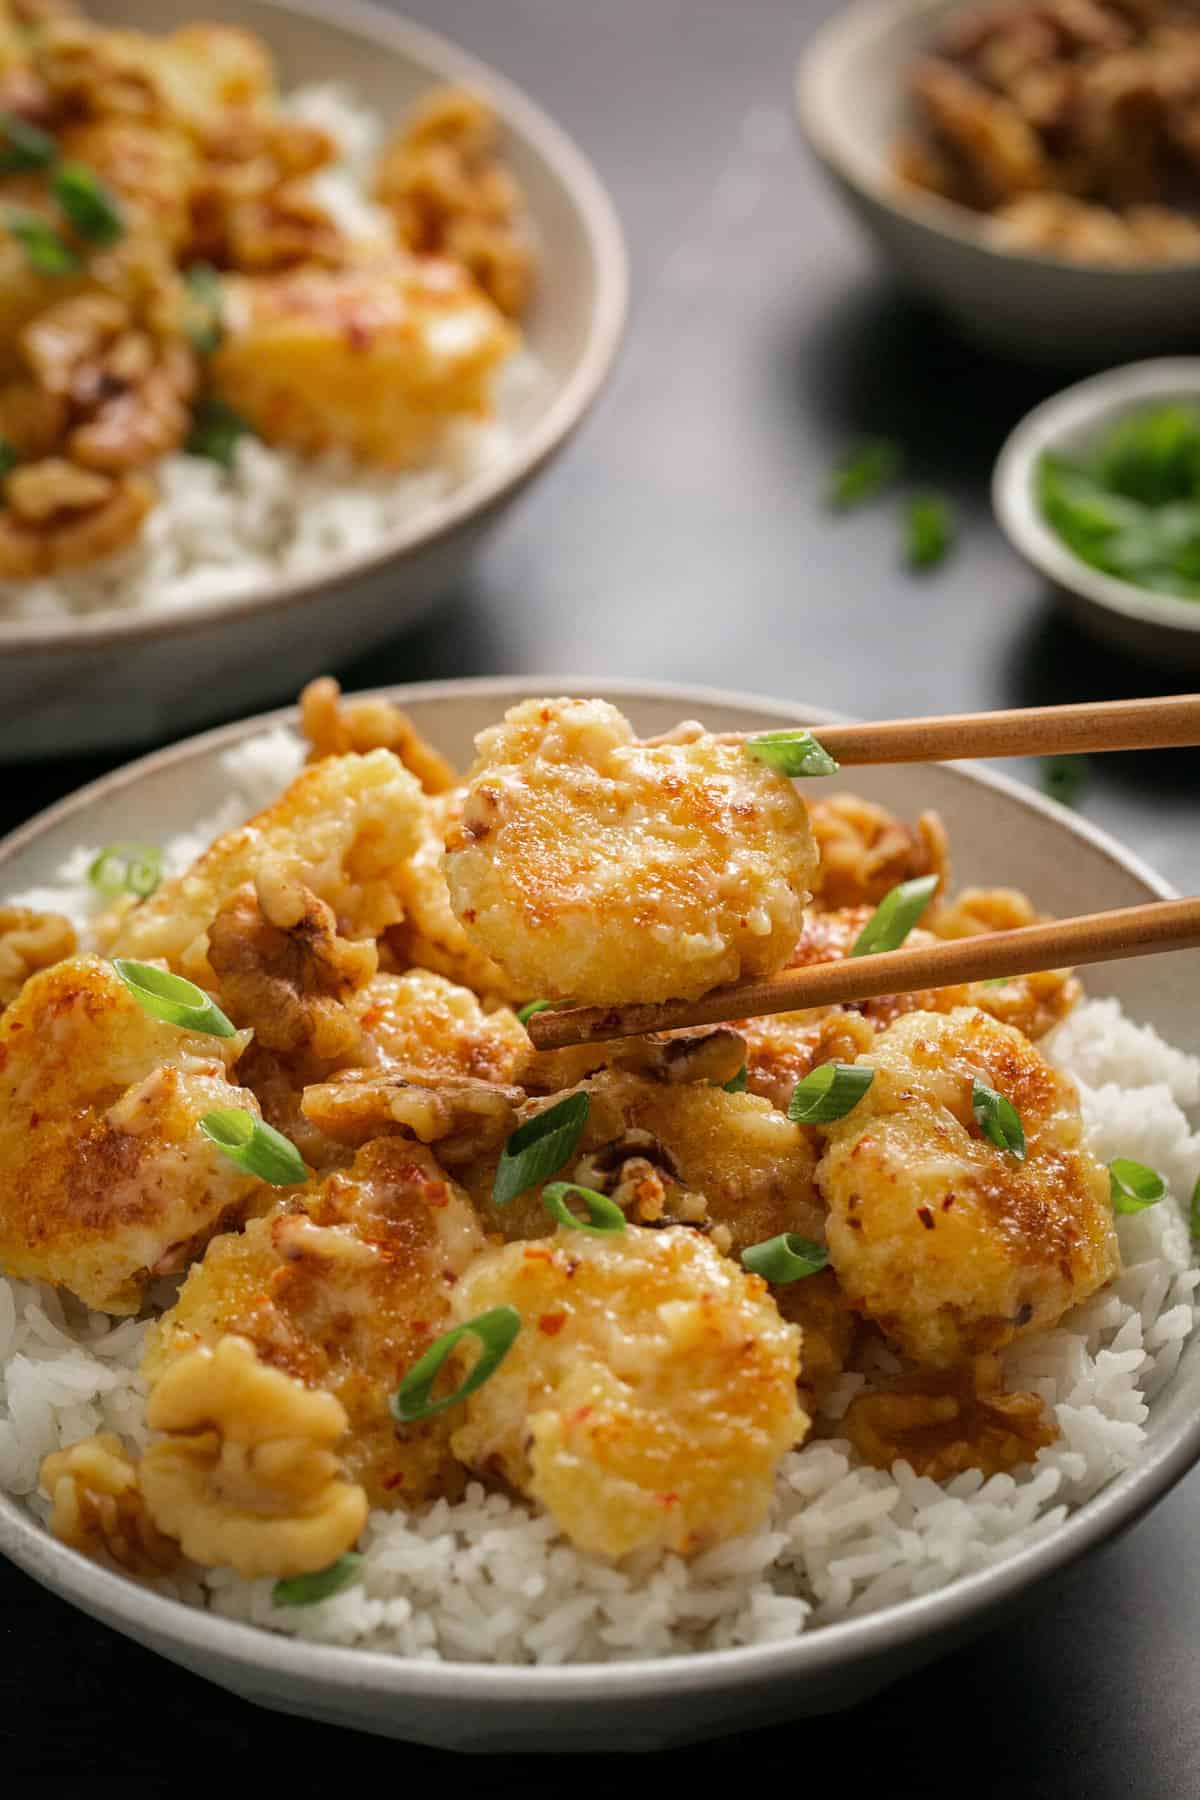 chopsticks lifting shrimp from bowl of rice